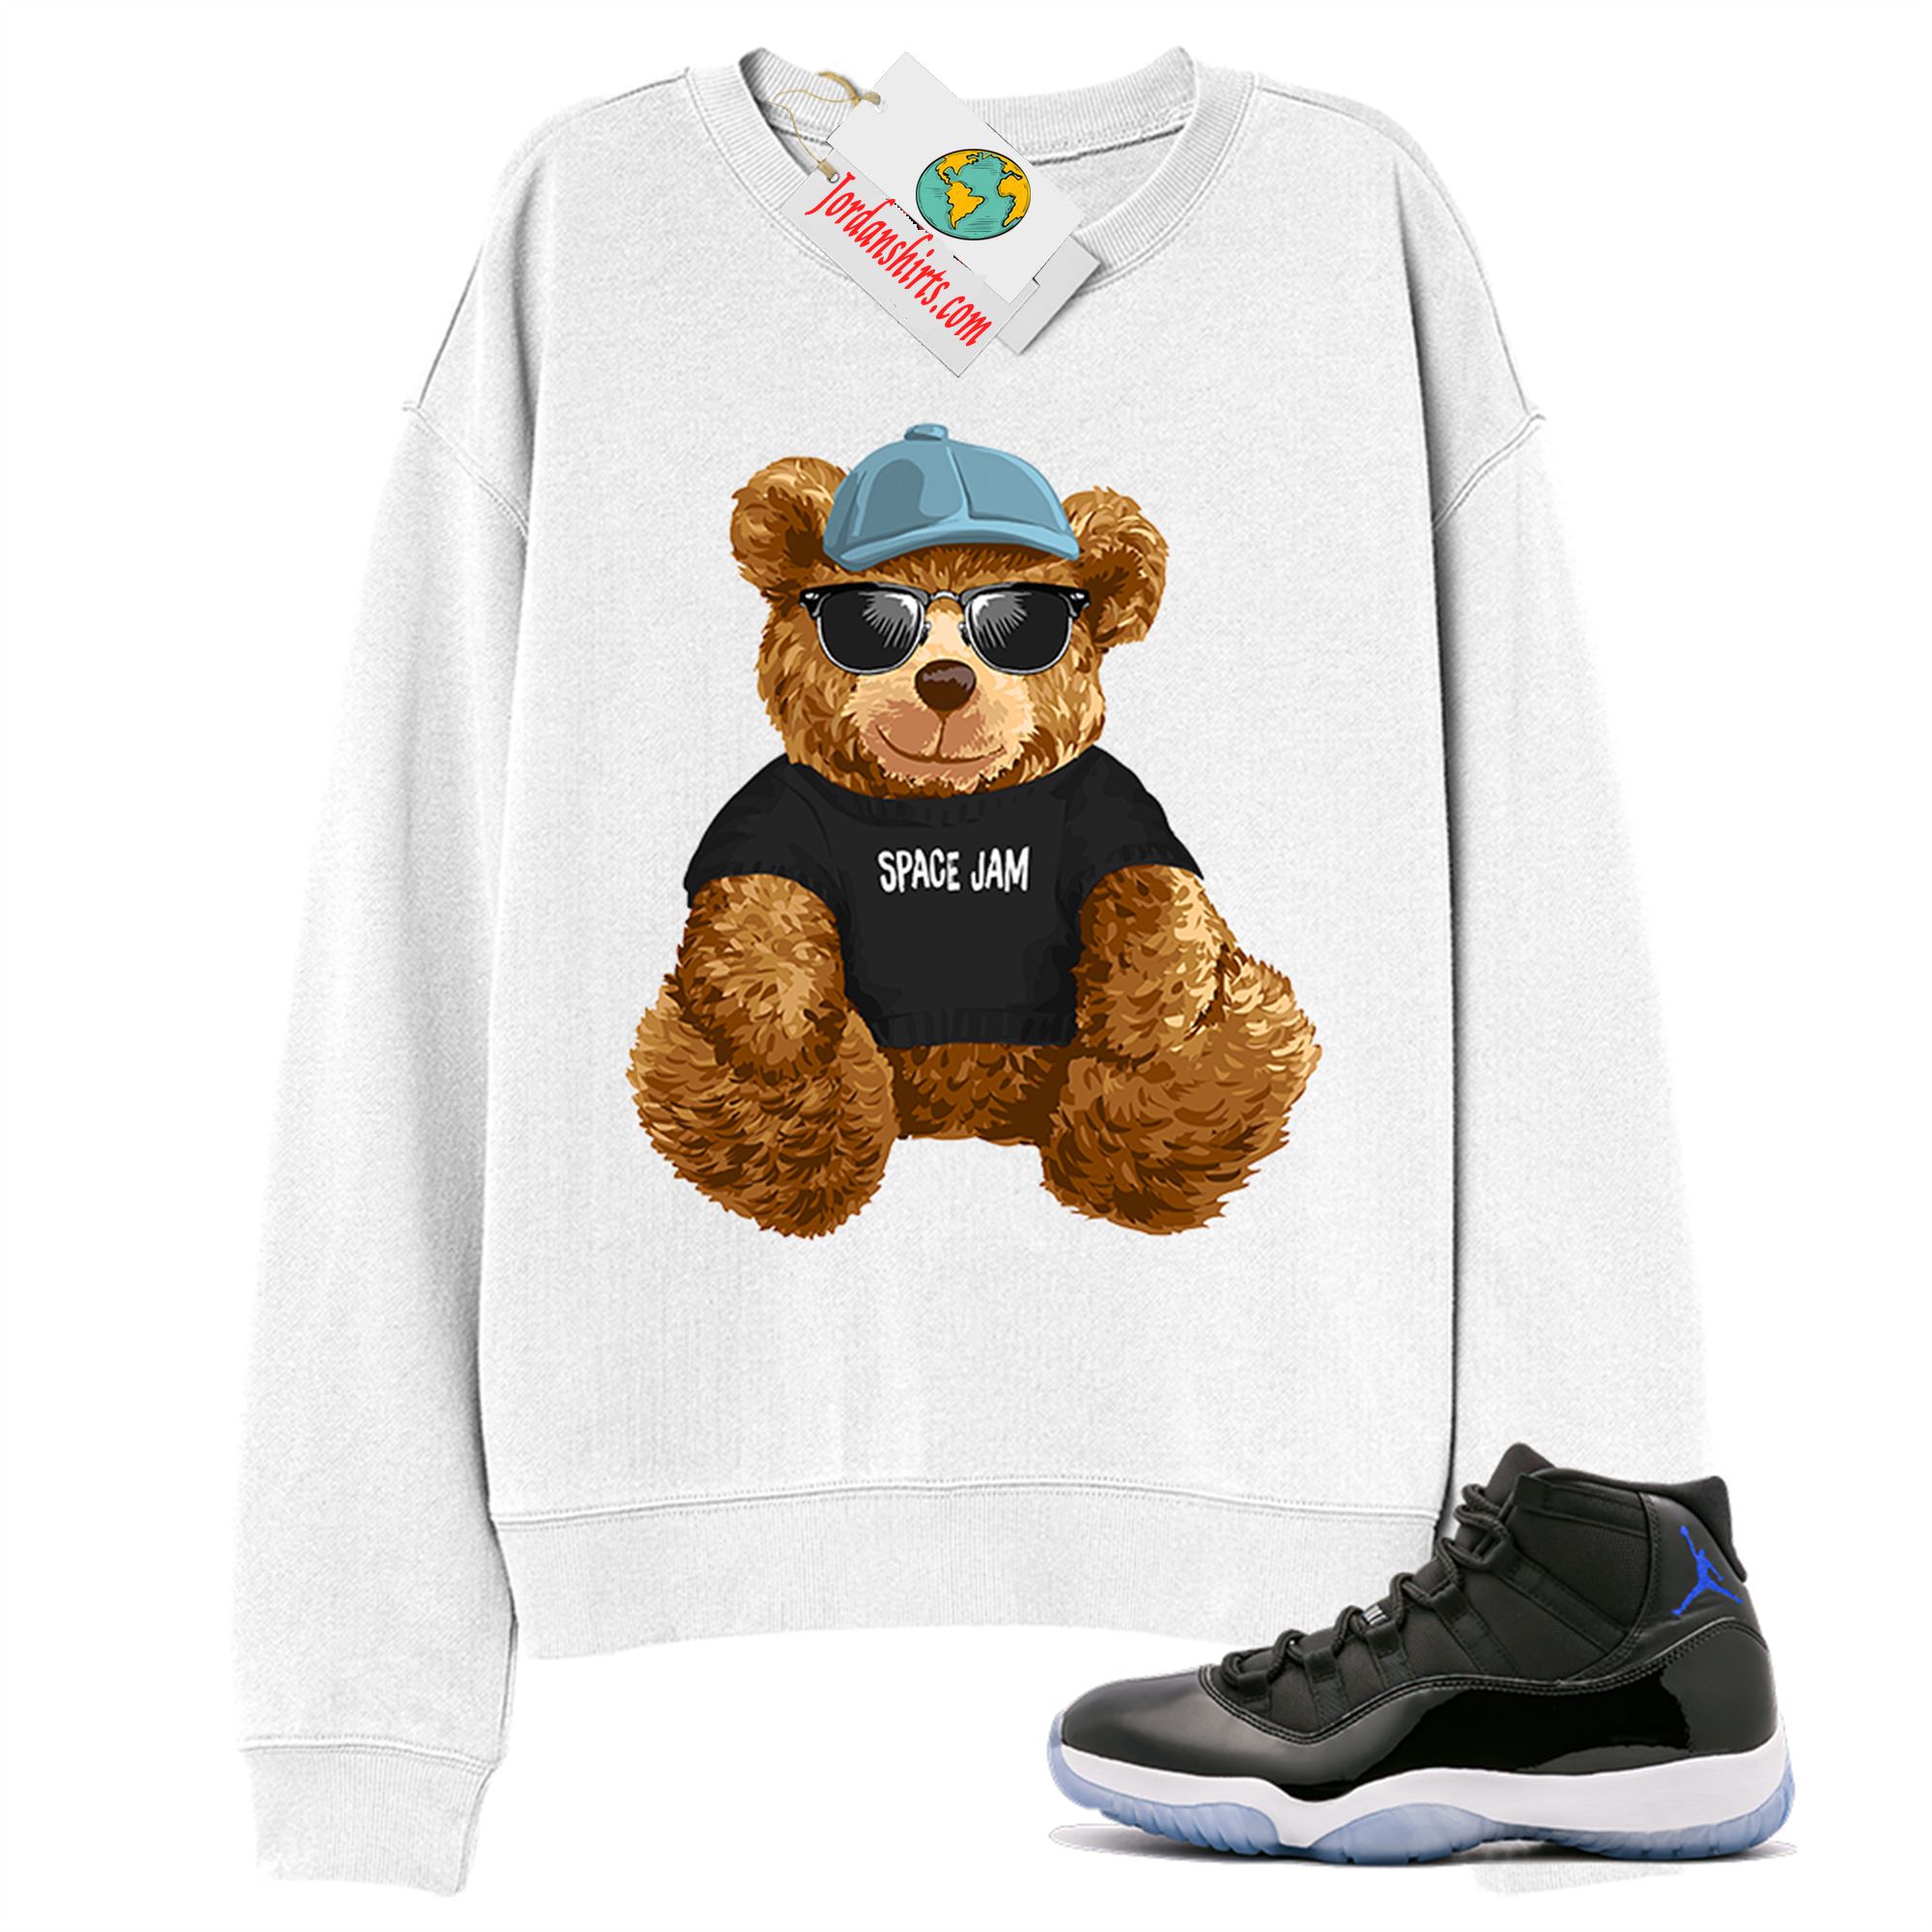 Jordan 11 Sweatshirt, Teddy Bear With Sunglasses Hat White Sweatshirt Air Jordan 11 Space Jam 11s Size Up To 5xl